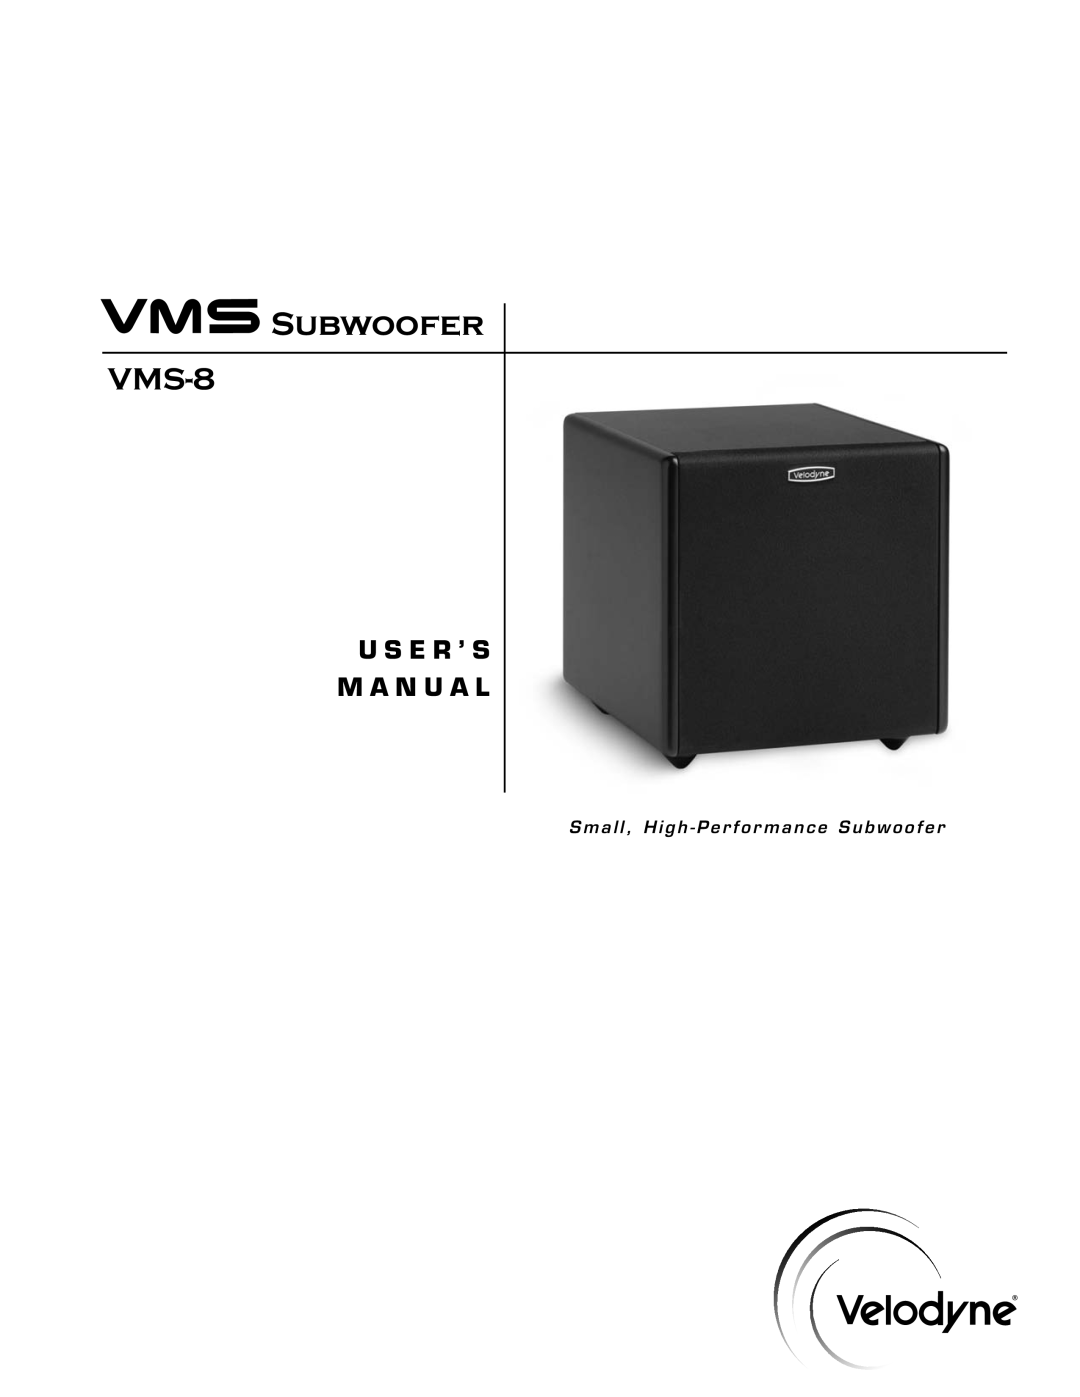 Velodyne Acoustics VMS-8 user manual Subwoofer, U S E R ’ S M A N U A L 